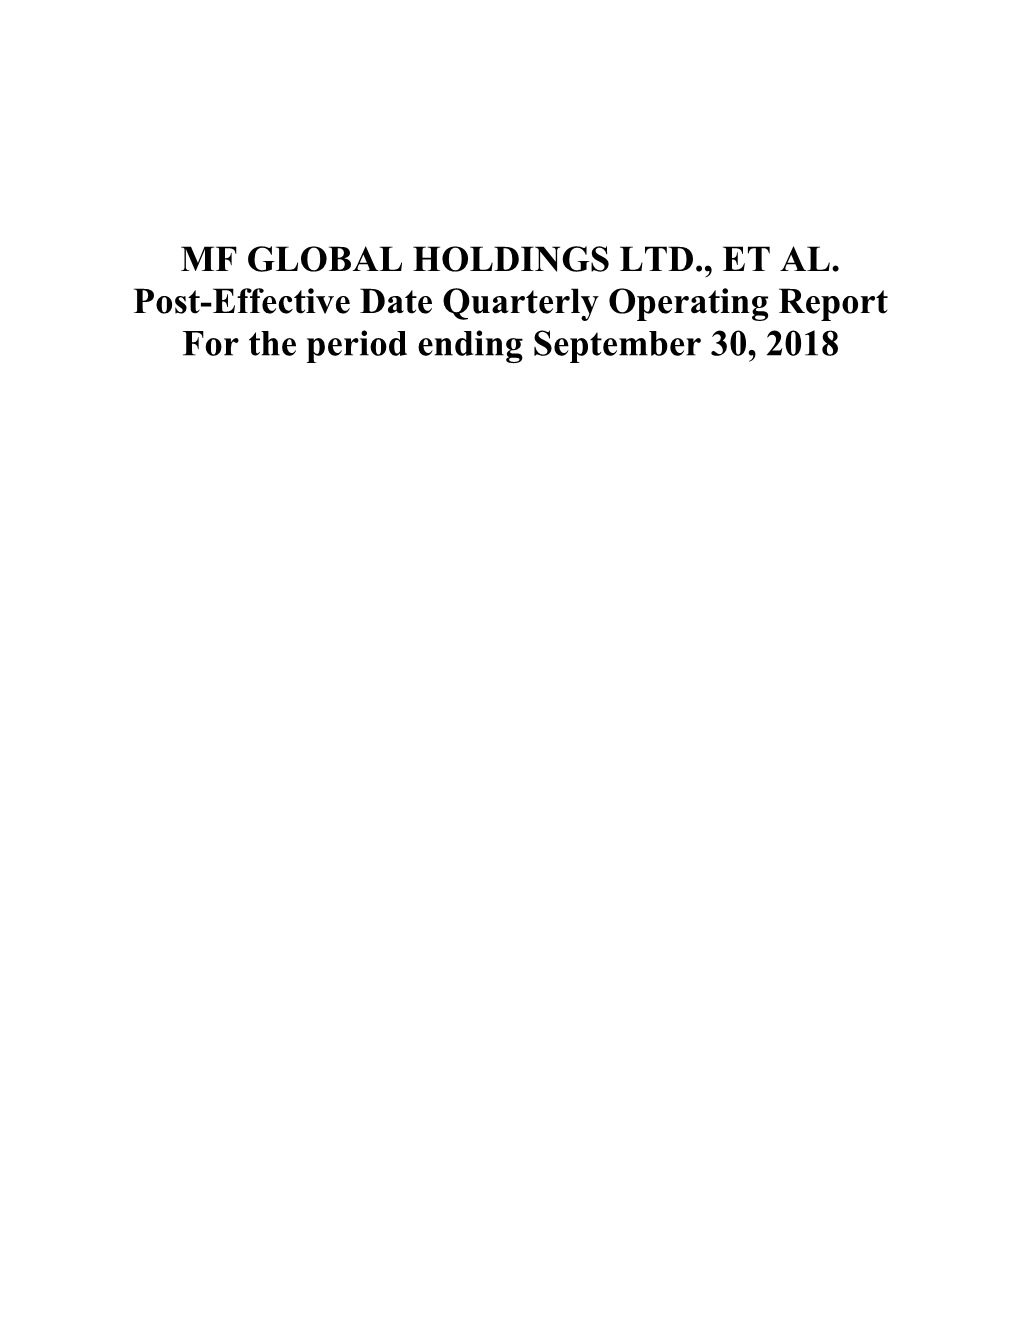 MF GLOBAL HOLDINGS LTD., ET AL. Post-Effective Date Quarterly Operating Report for the Period Ending September 30, 2018